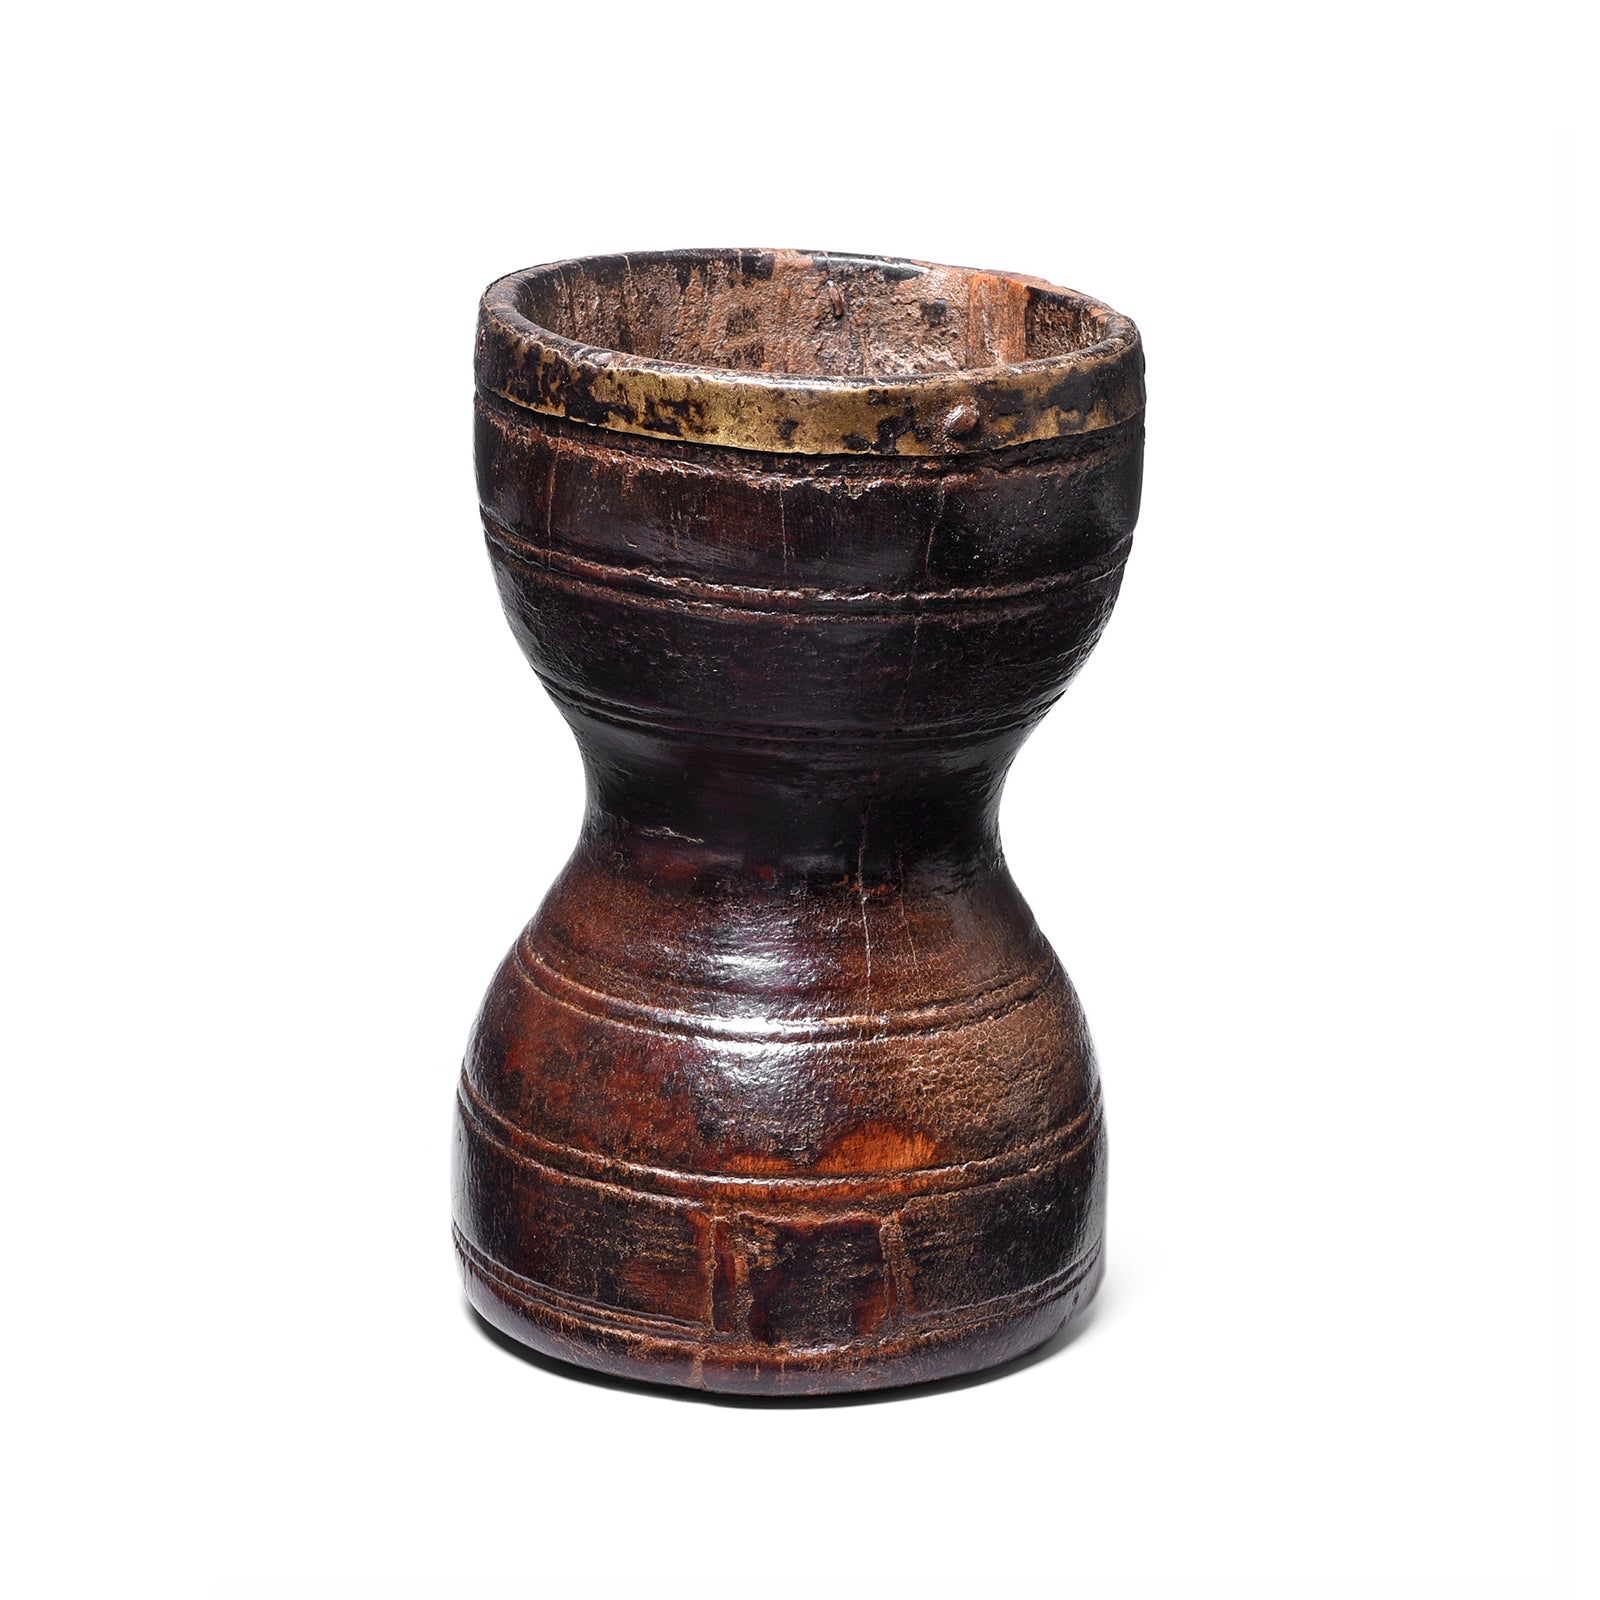 Antique Carved Teak Mortar From Kerala - 19th Century | Indigo Antiques